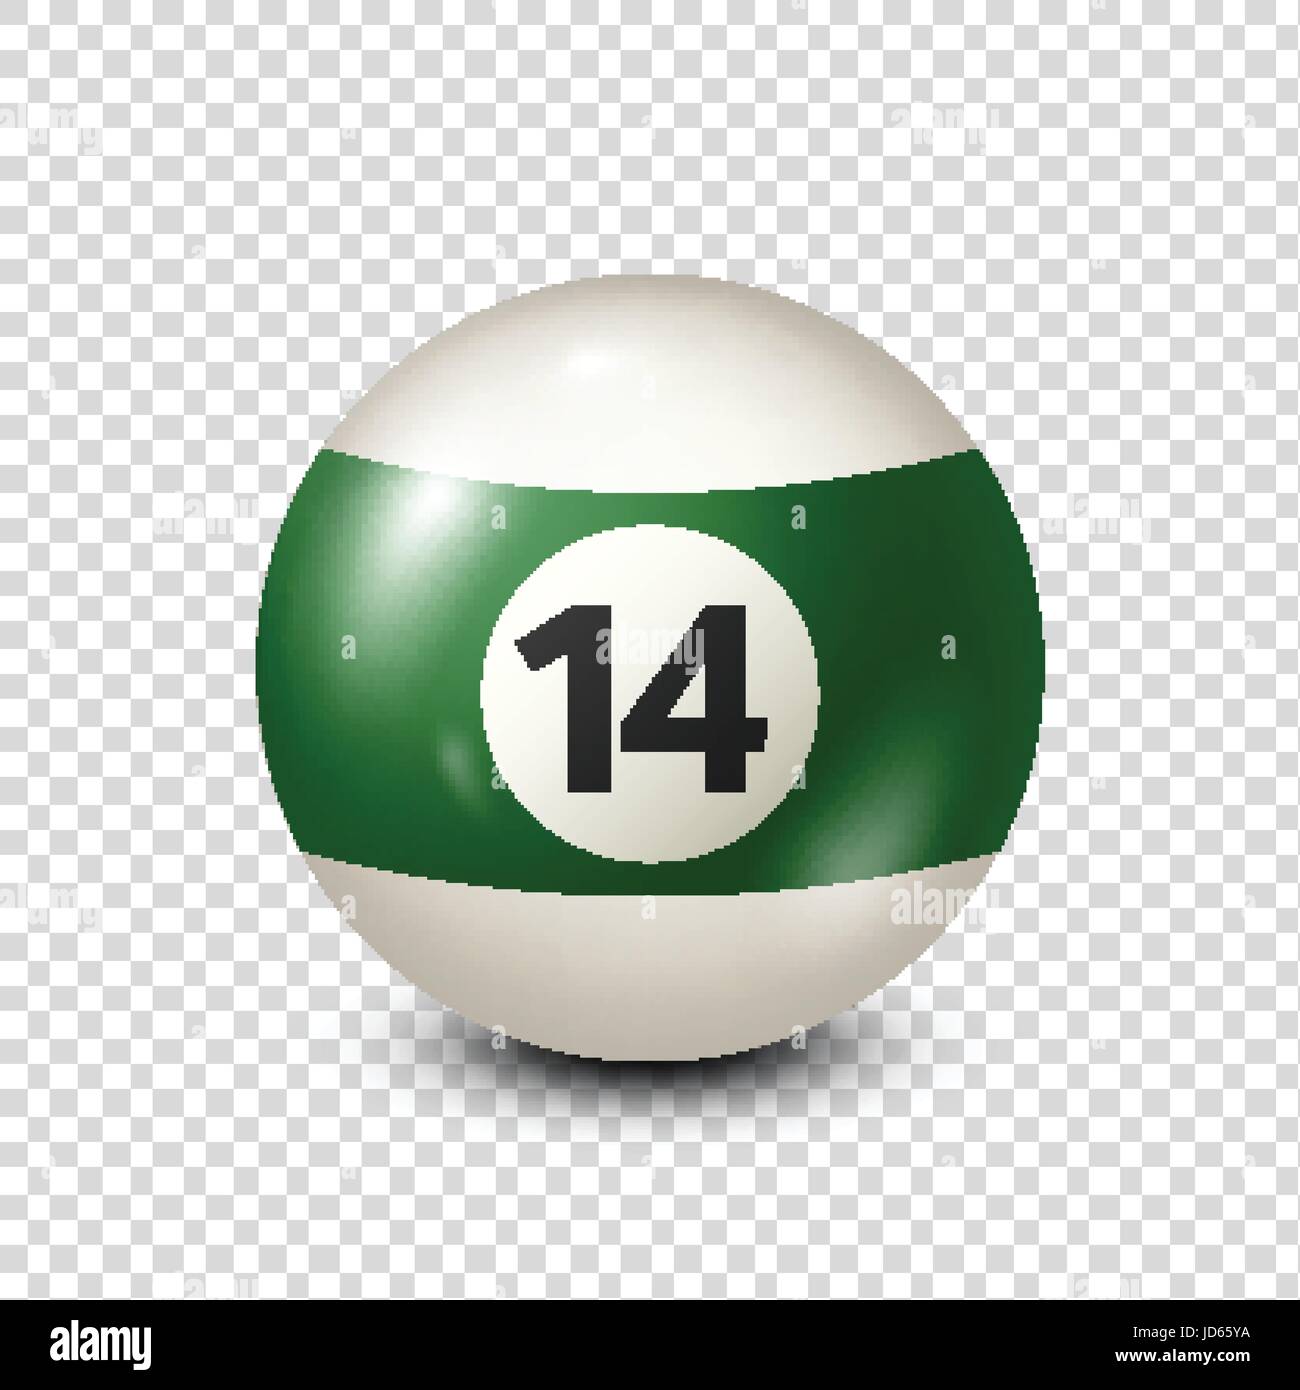 Grüne Pool Billardkugel mit der Nummer 14.Snooker. Transparenten  Hintergrund. Vektor-Illustration Stock-Vektorgrafik - Alamy